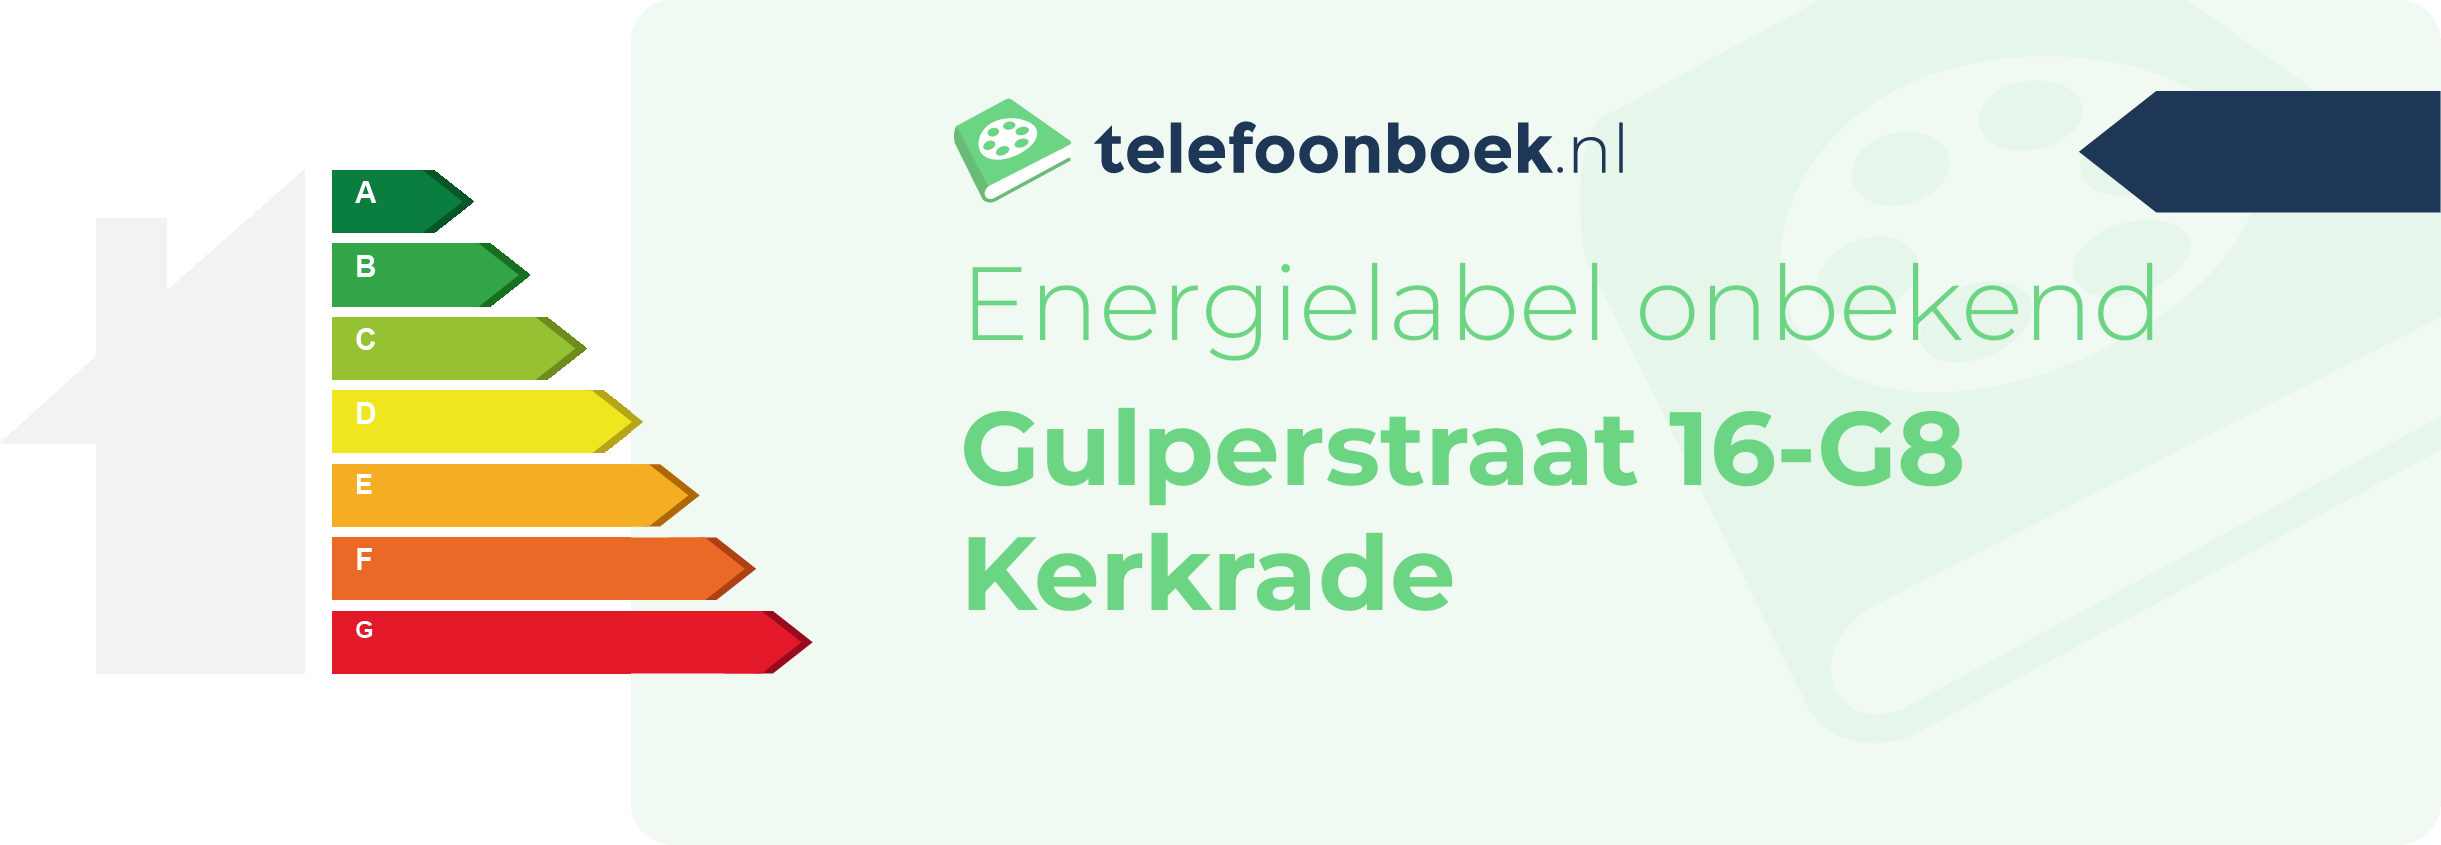 Energielabel Gulperstraat 16-G8 Kerkrade